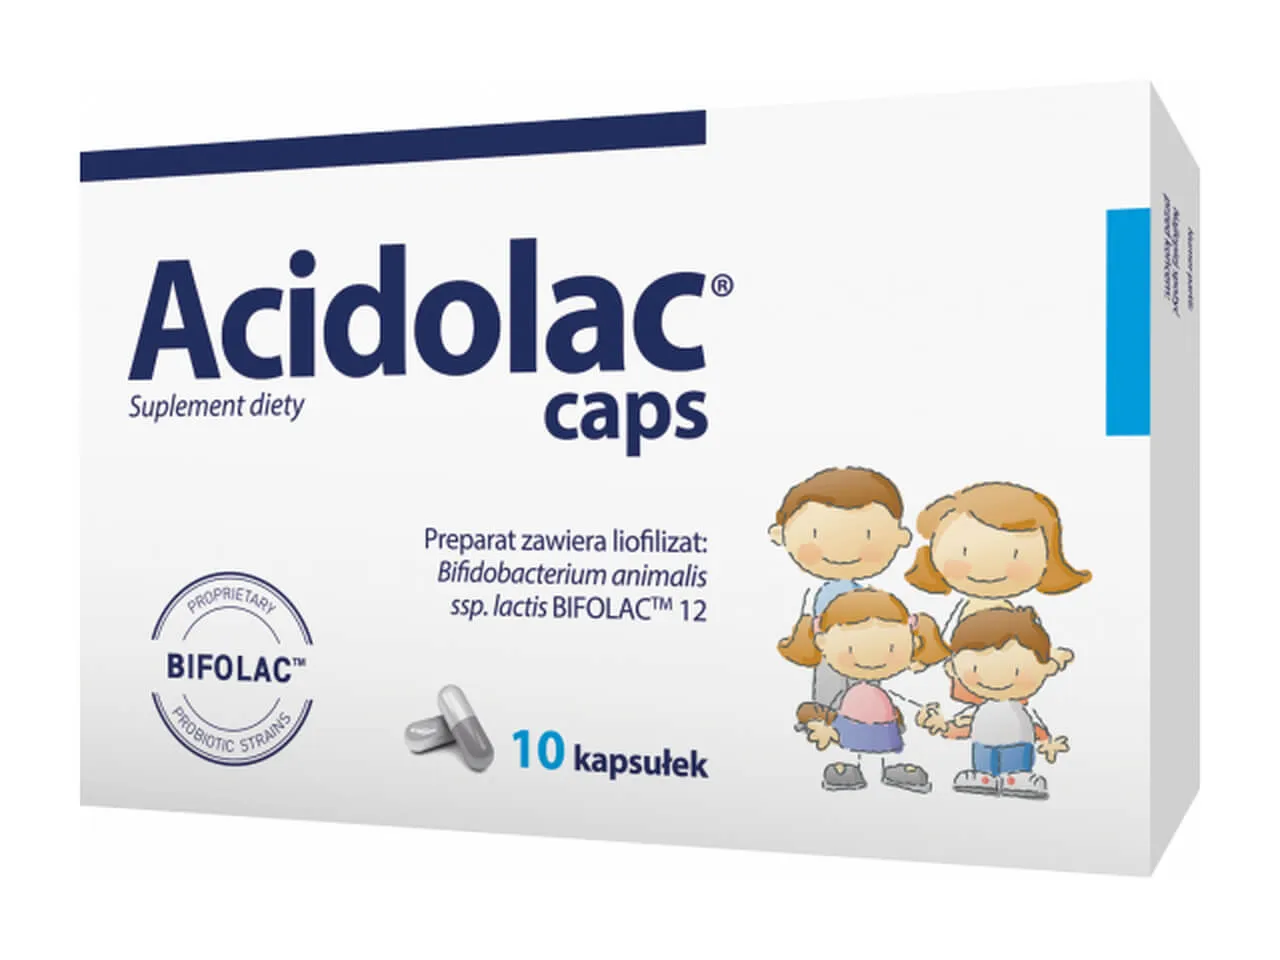 Acidolac Caps, suplement diety, 10 kapsułek. Data ważności 2022-09-30